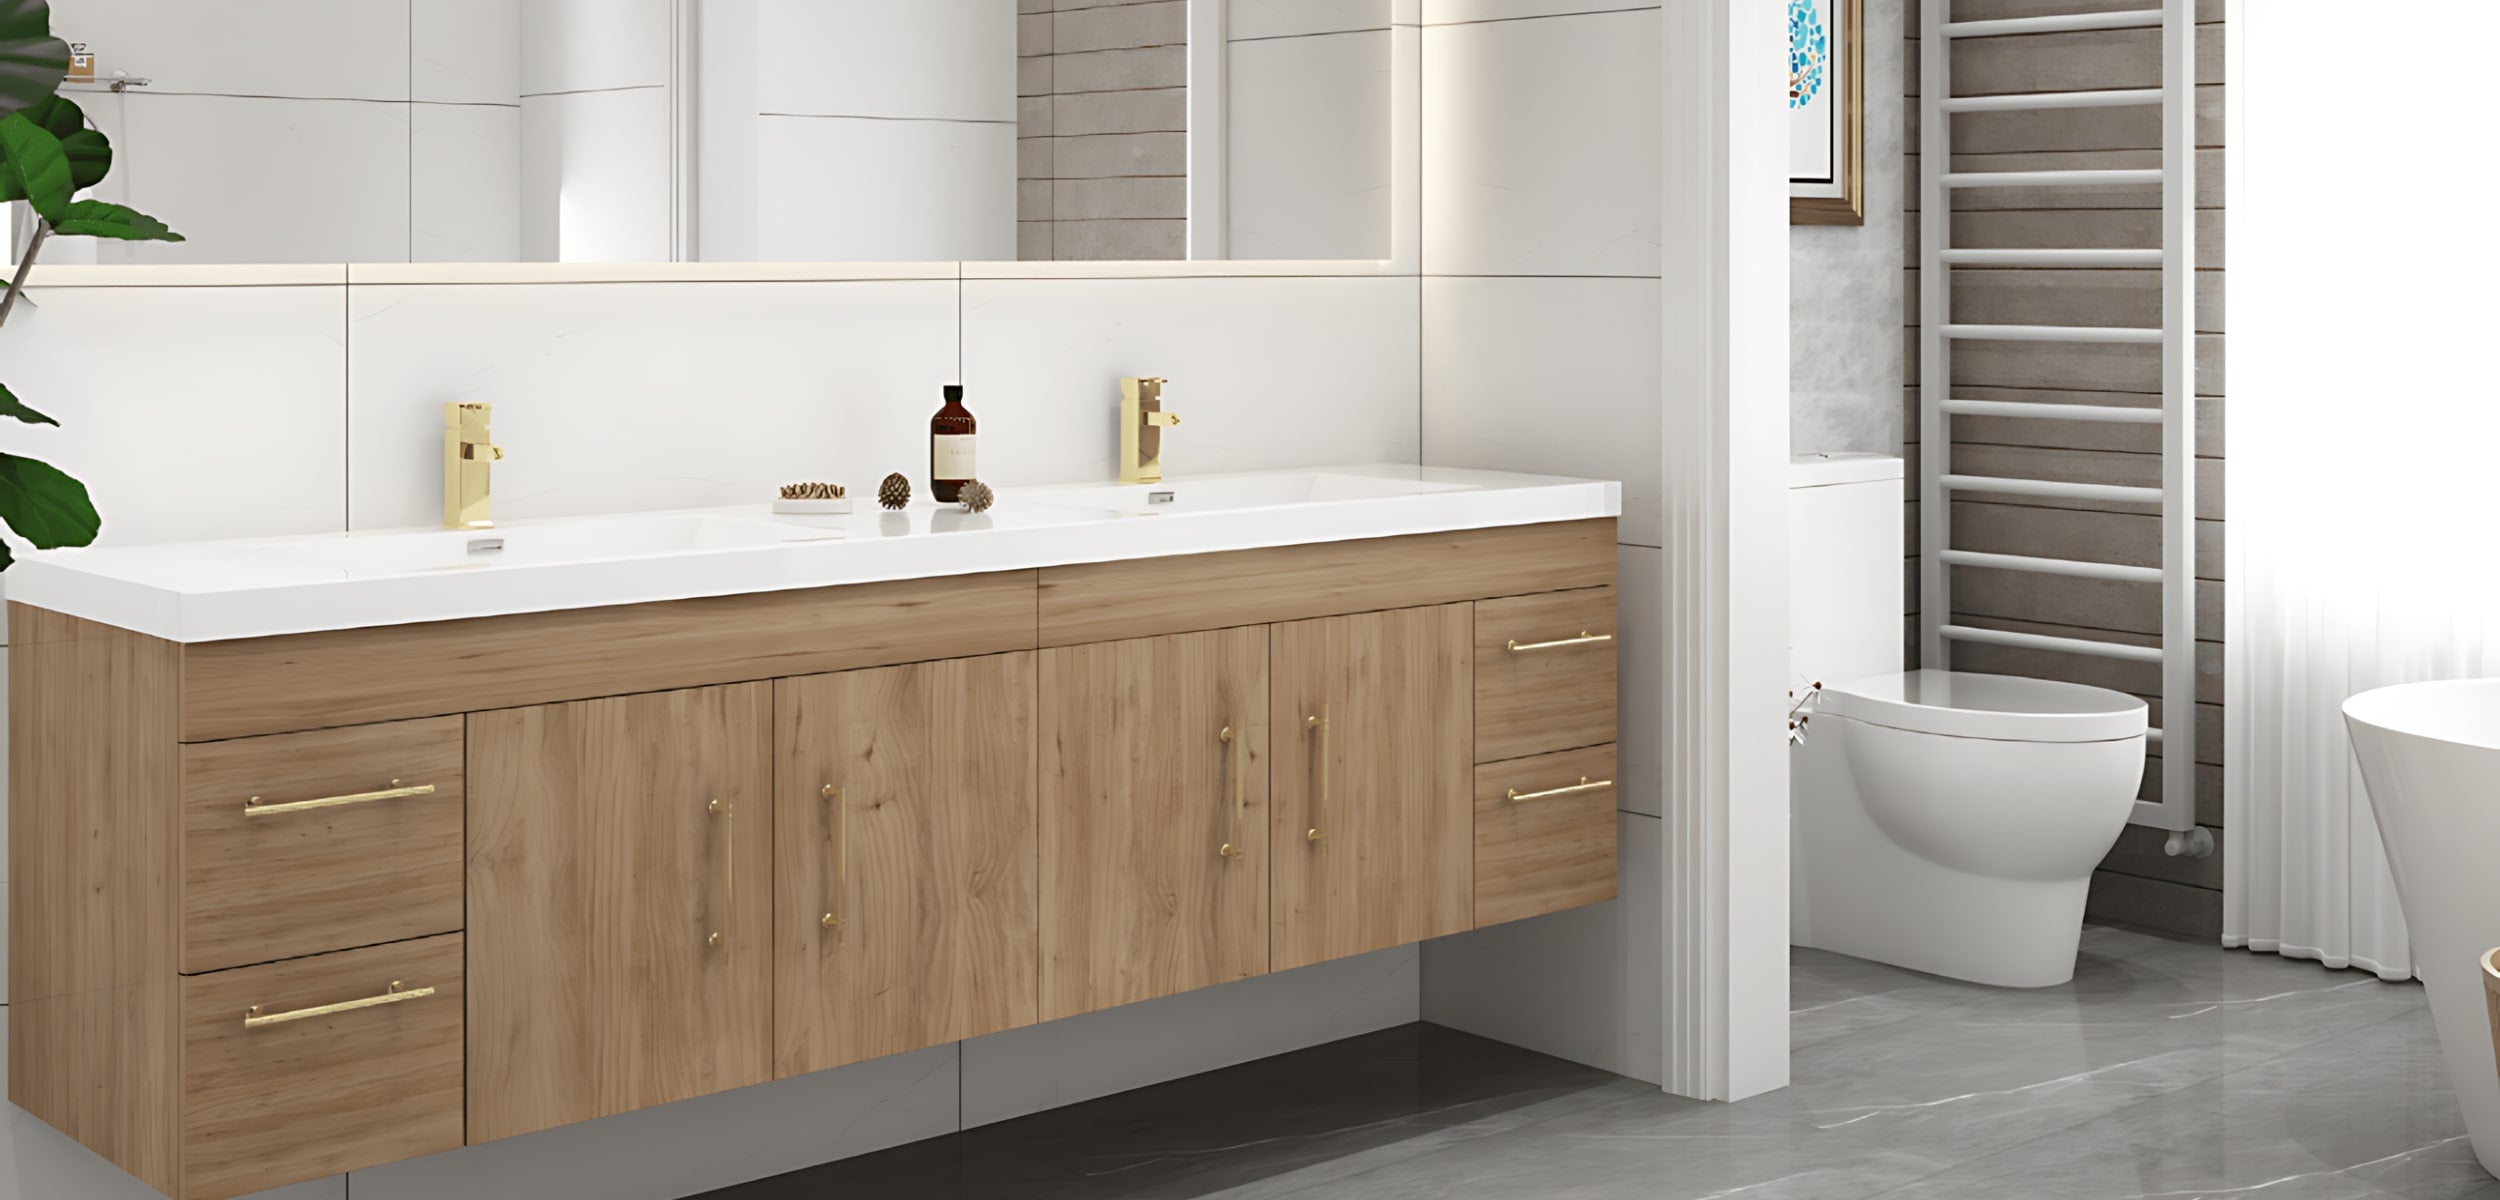 Floating Bathroom Vanities are clean, sleek modern bathroom vanities that will bring your bathroom into a new age.